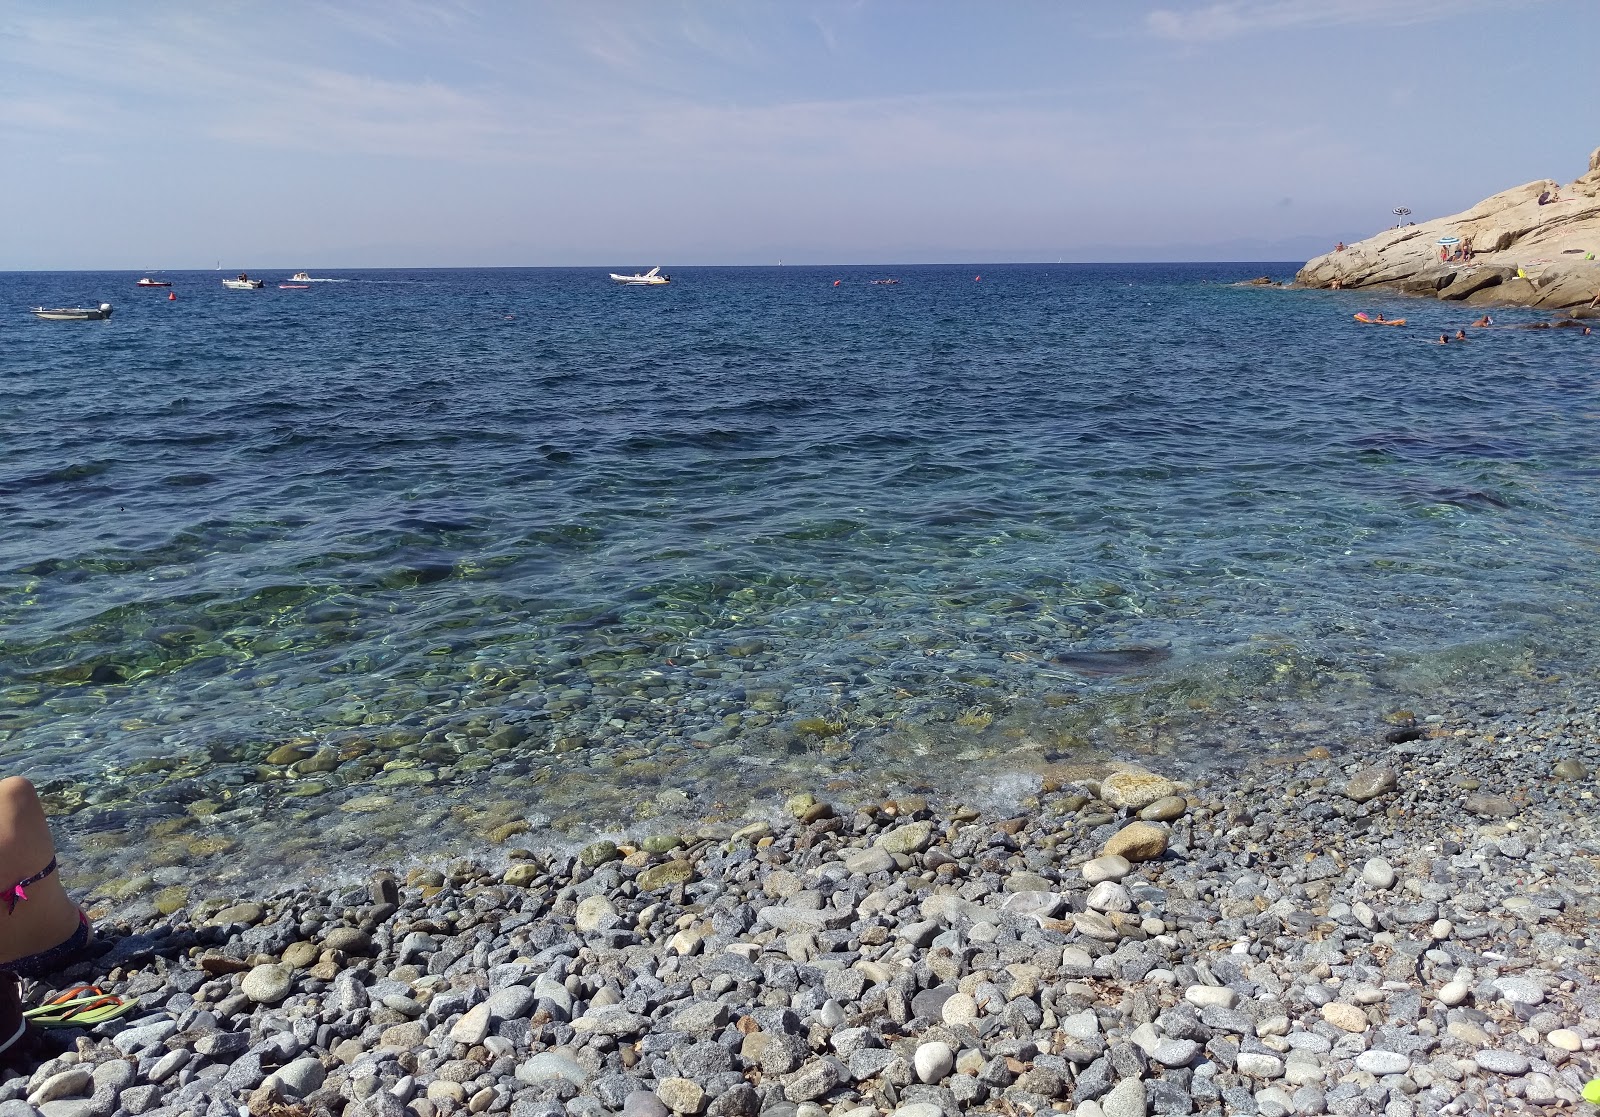 Fotografie cu Spiaggia di Chiessi cu nivelul de curățenie înalt